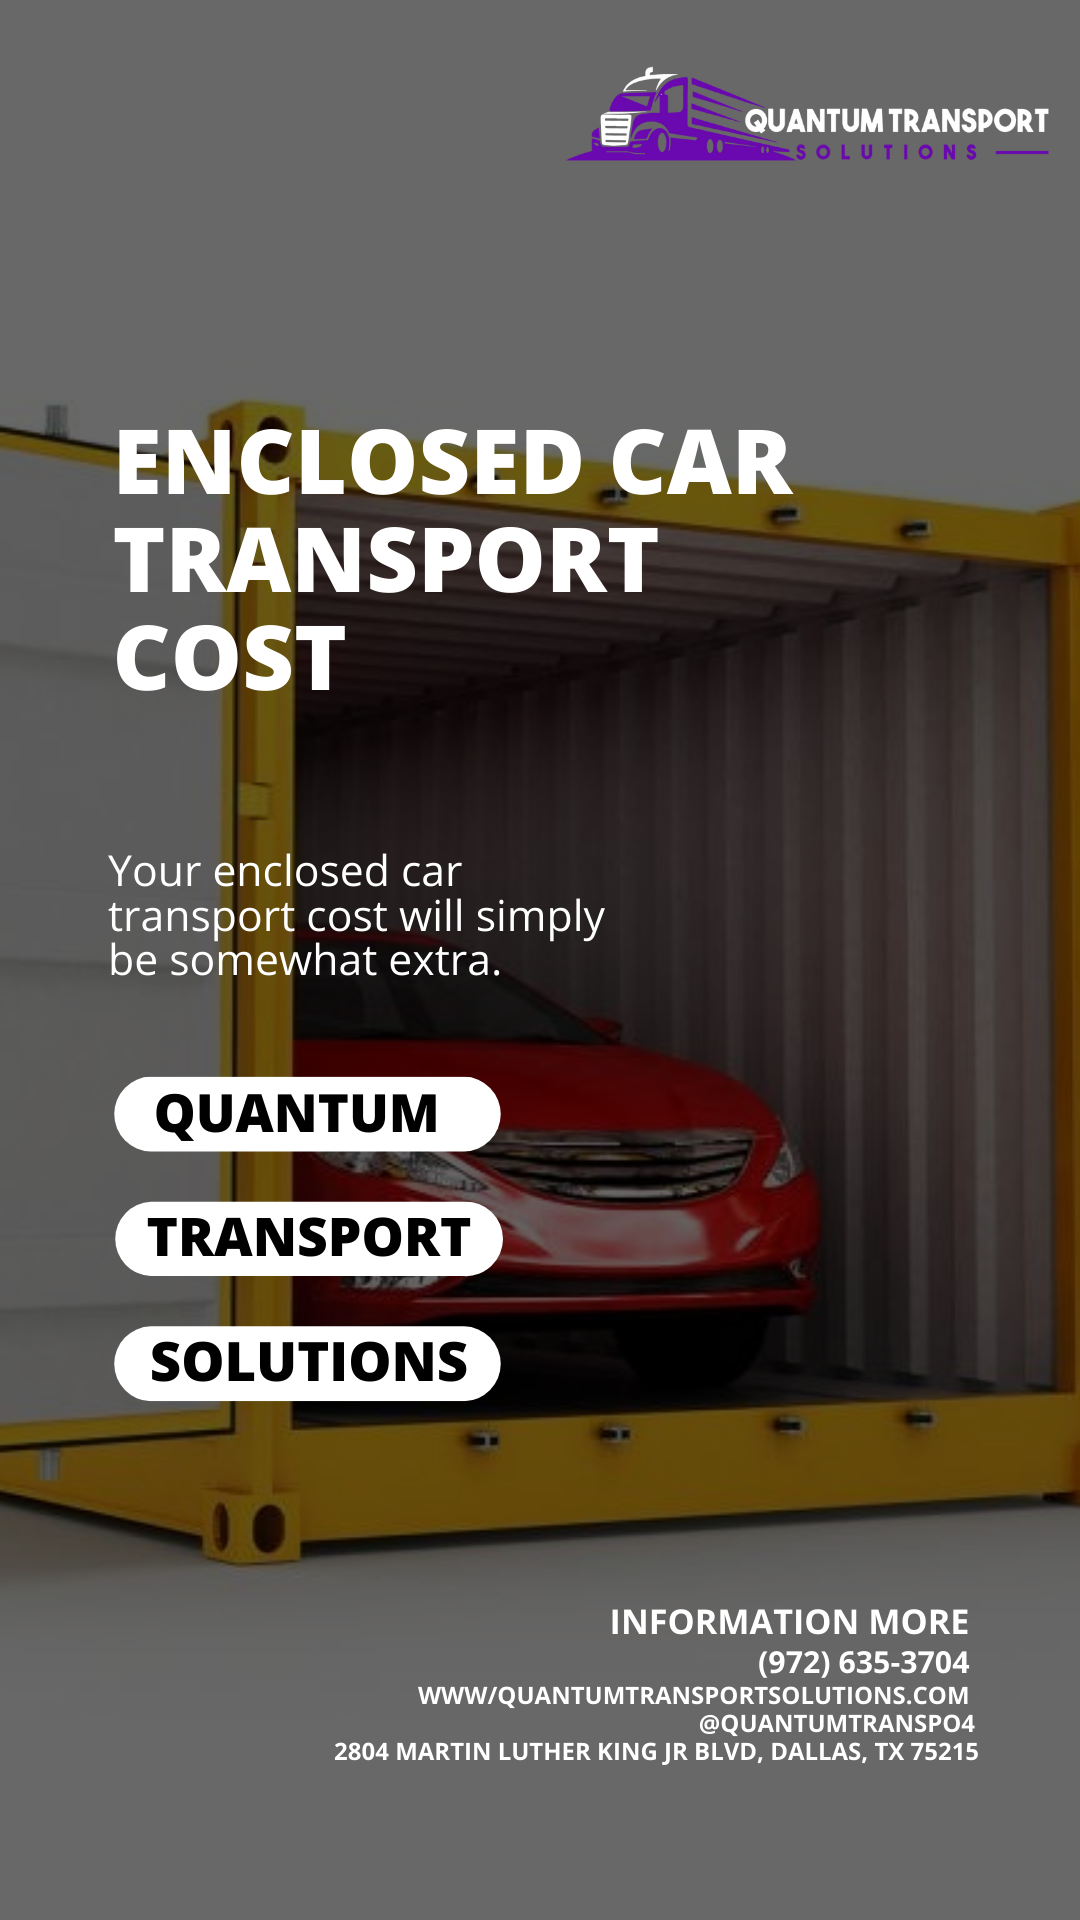 enclsoed car transport cost